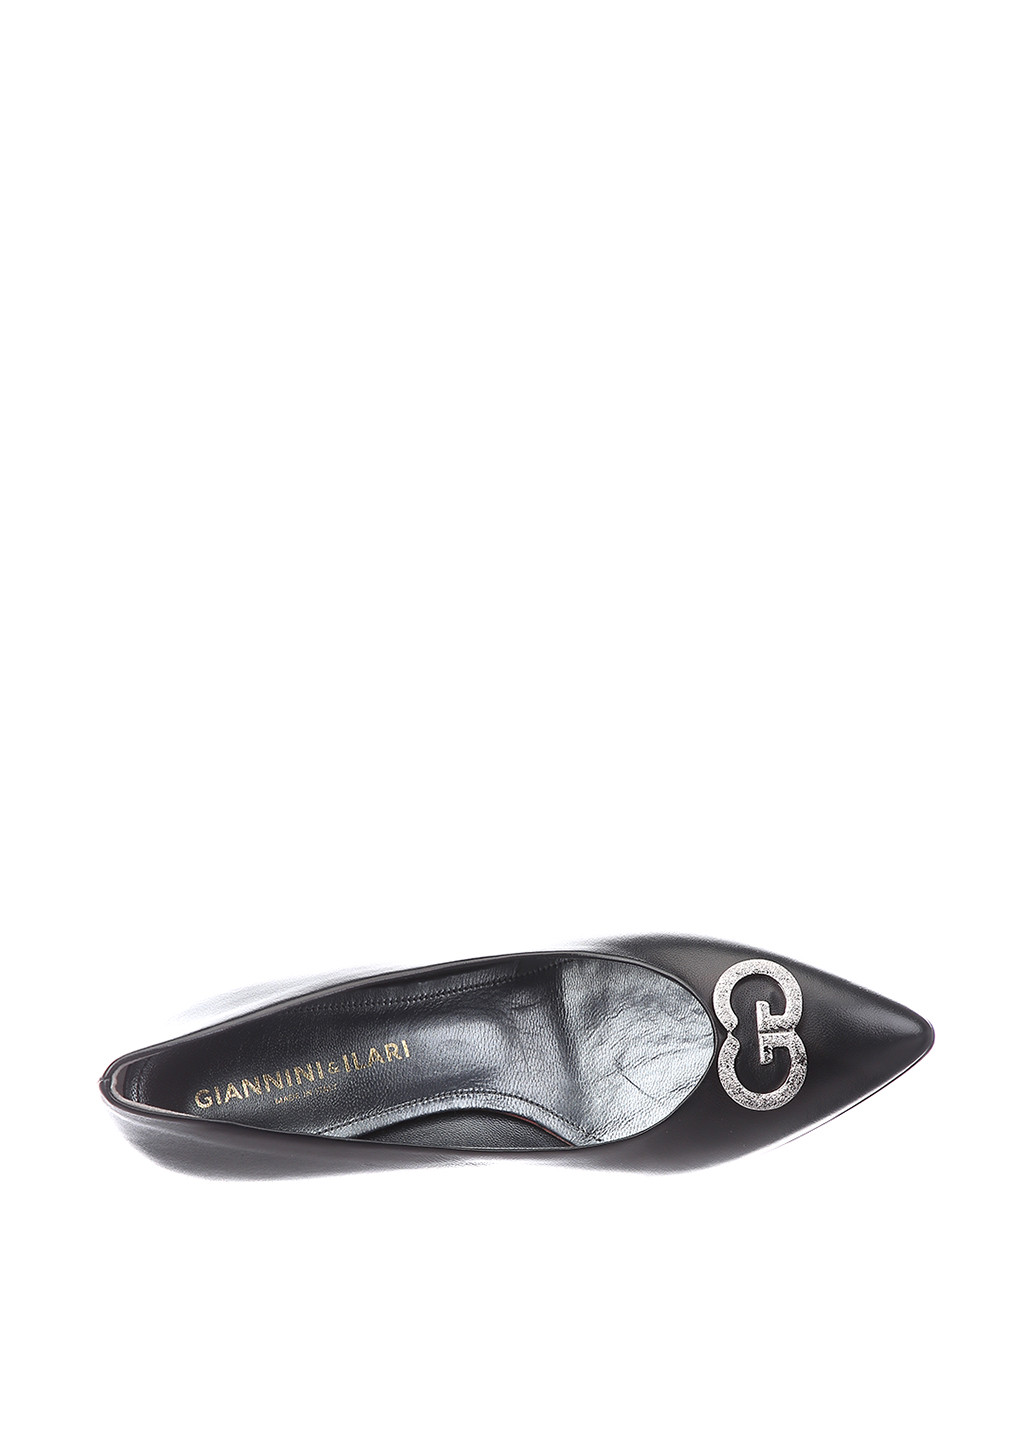 Туфли Giannini & Ilari на среднем каблуке с металлическими вставками